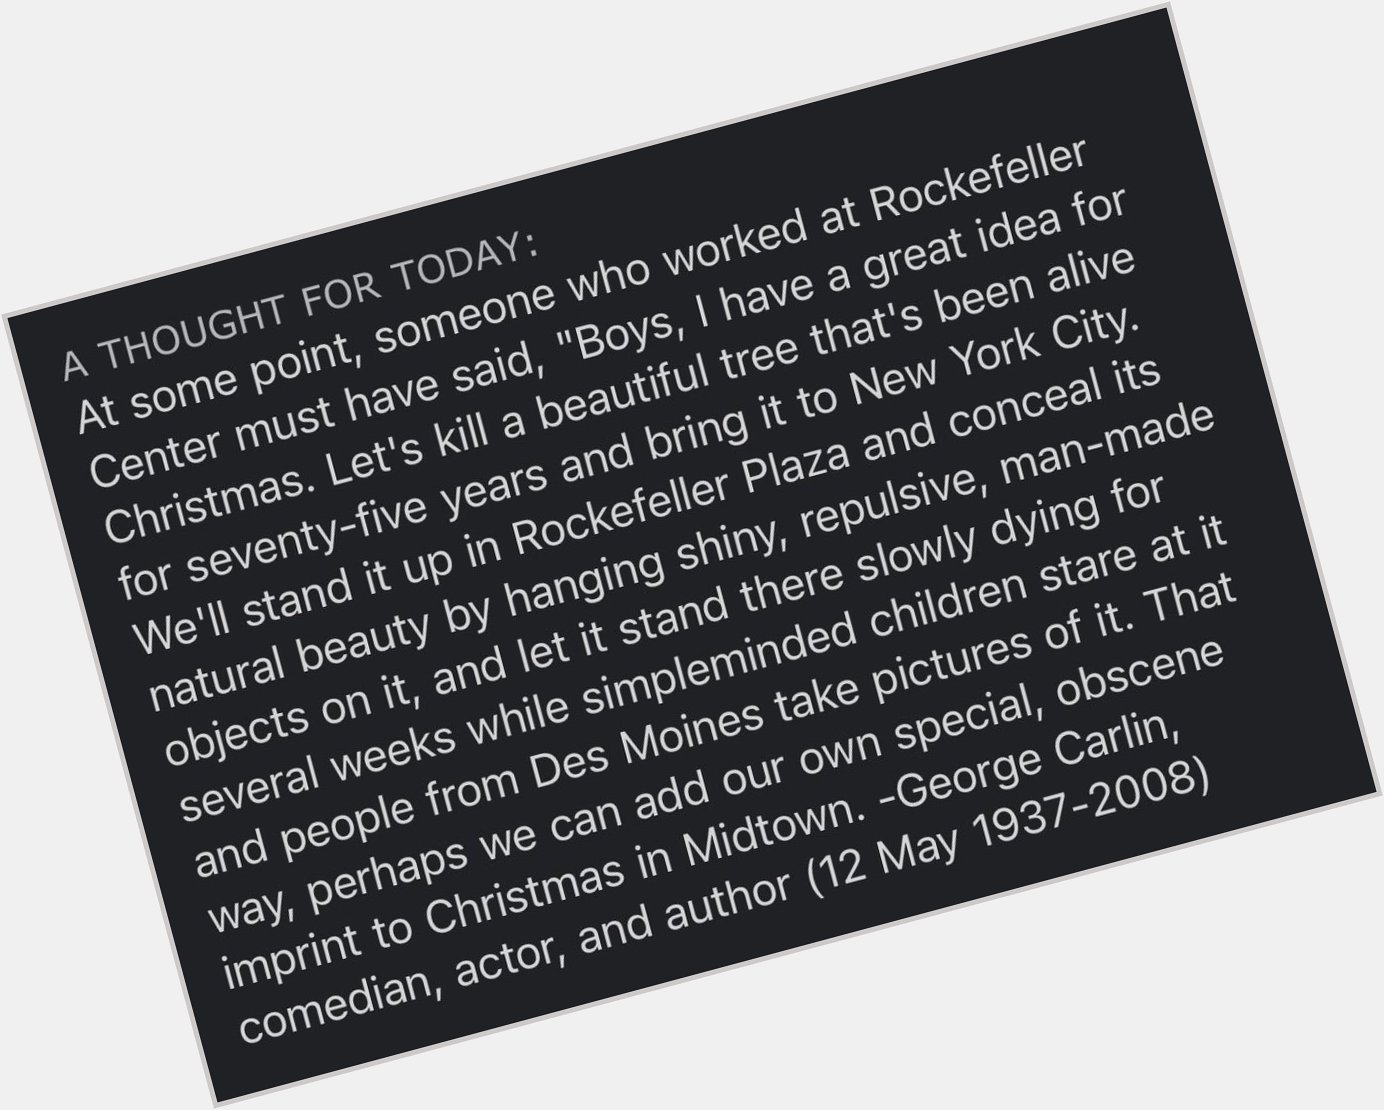 Happy birthday, George Carlin! via Thoughts, 